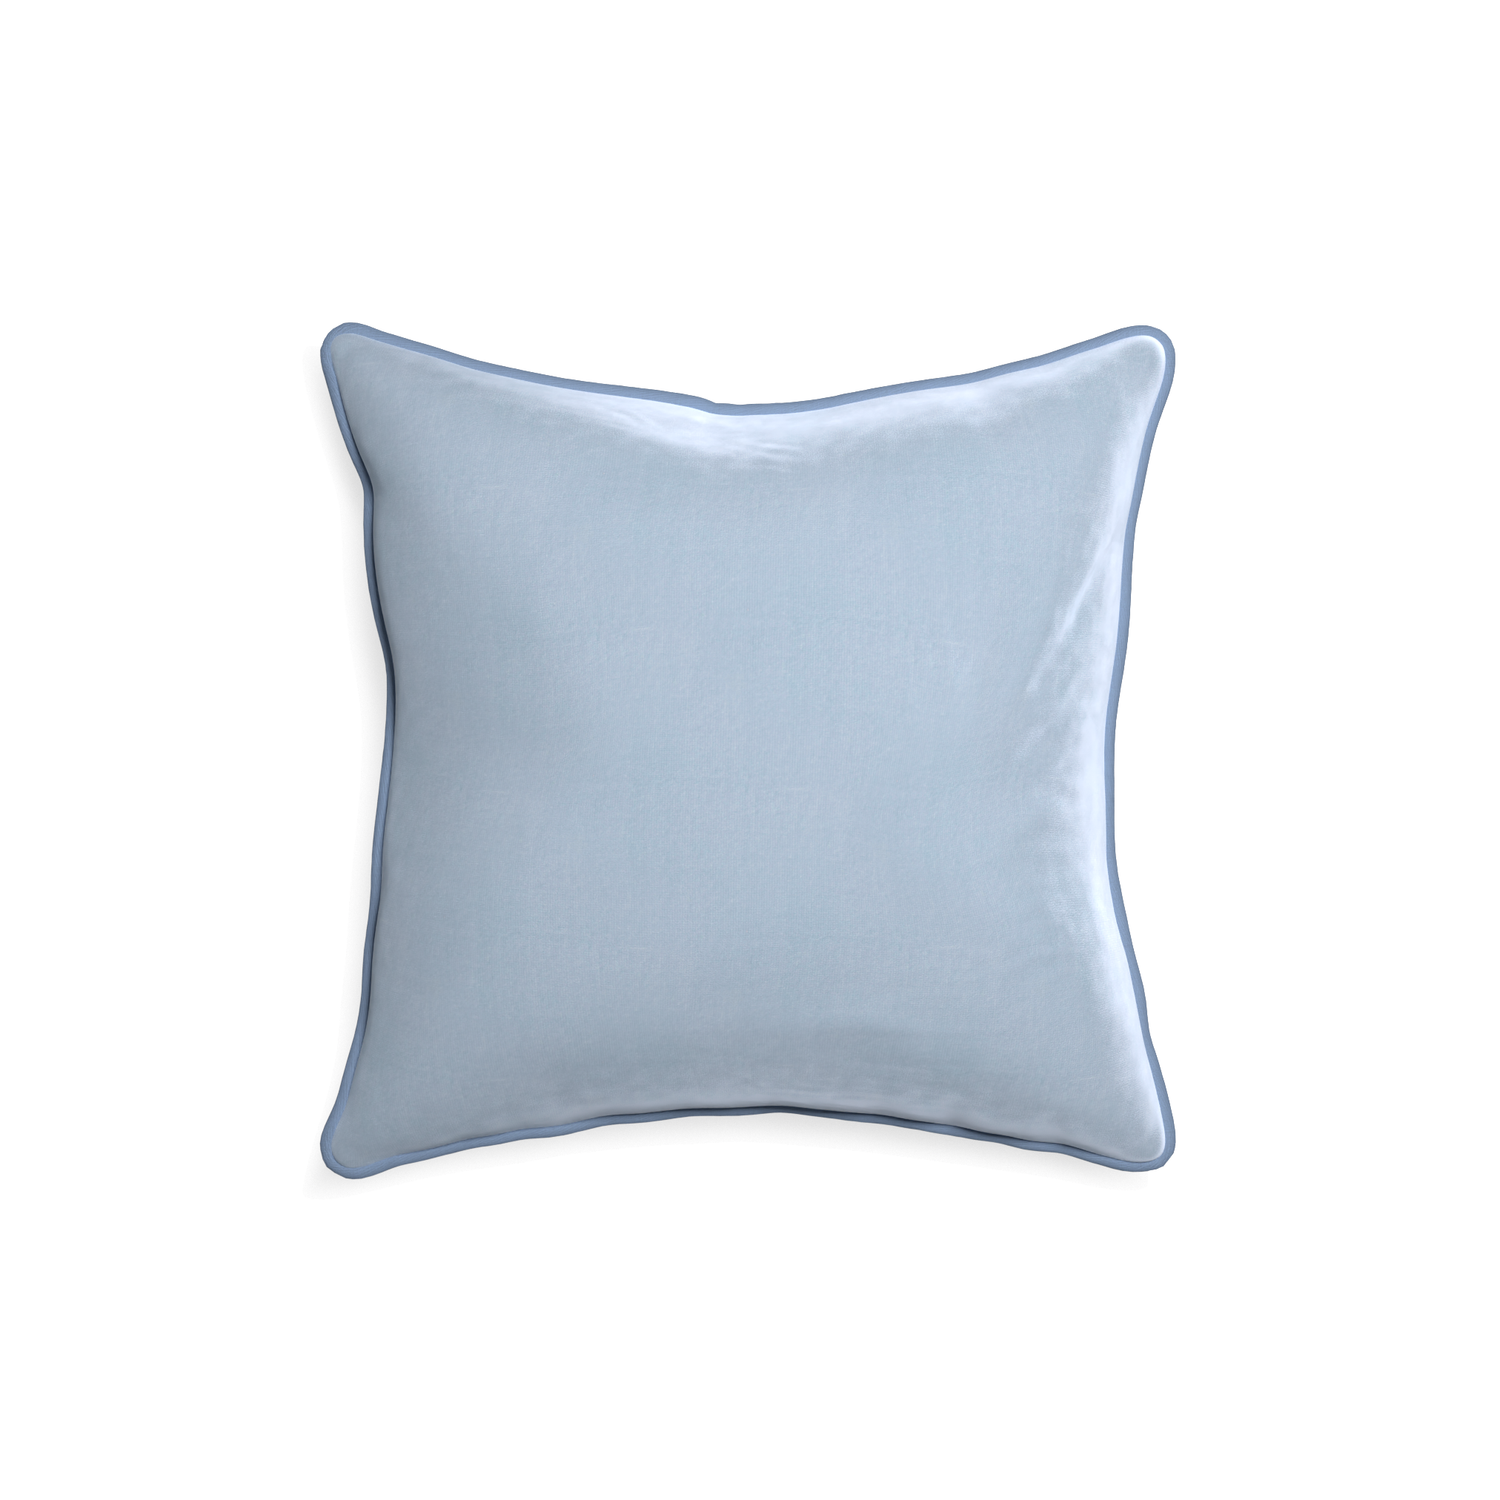 18-square sky velvet custom pillow with sky piping on white background